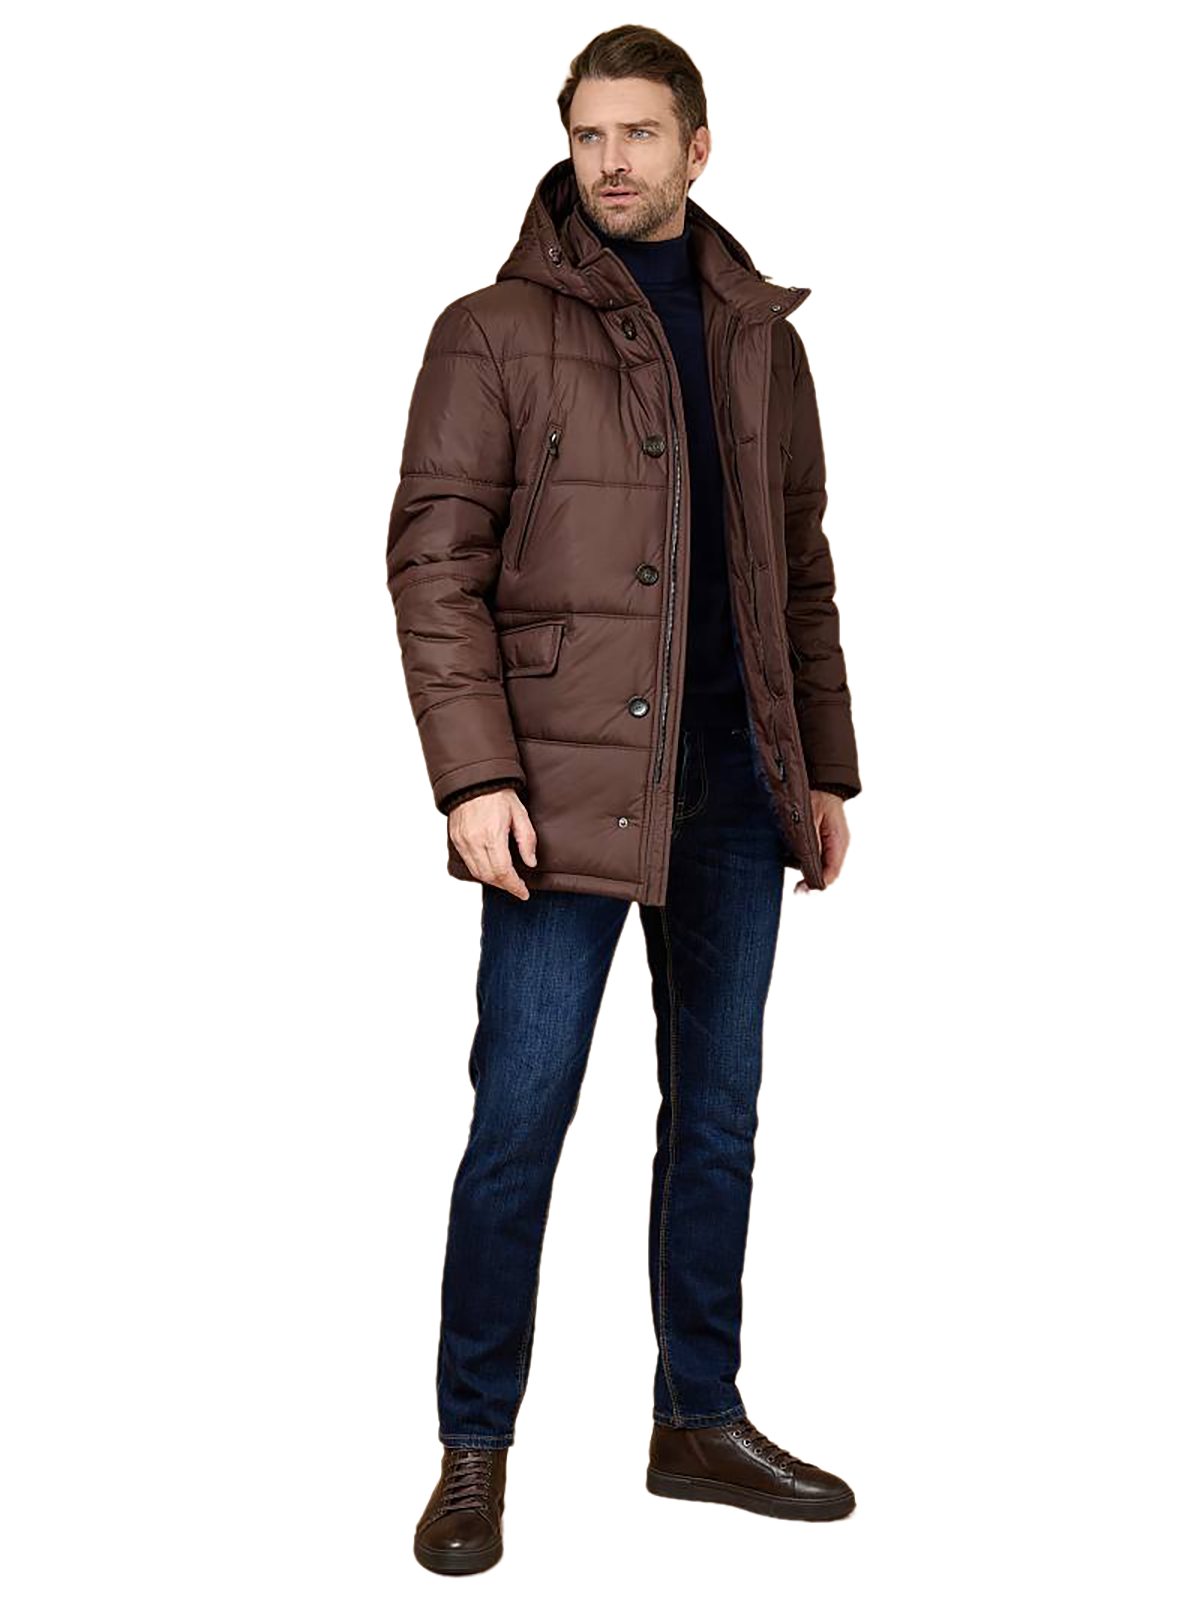 Куртка Bazioni 4096-2 M Bygli Firs для мужчин, размер 56/176, тёмно-коричневая